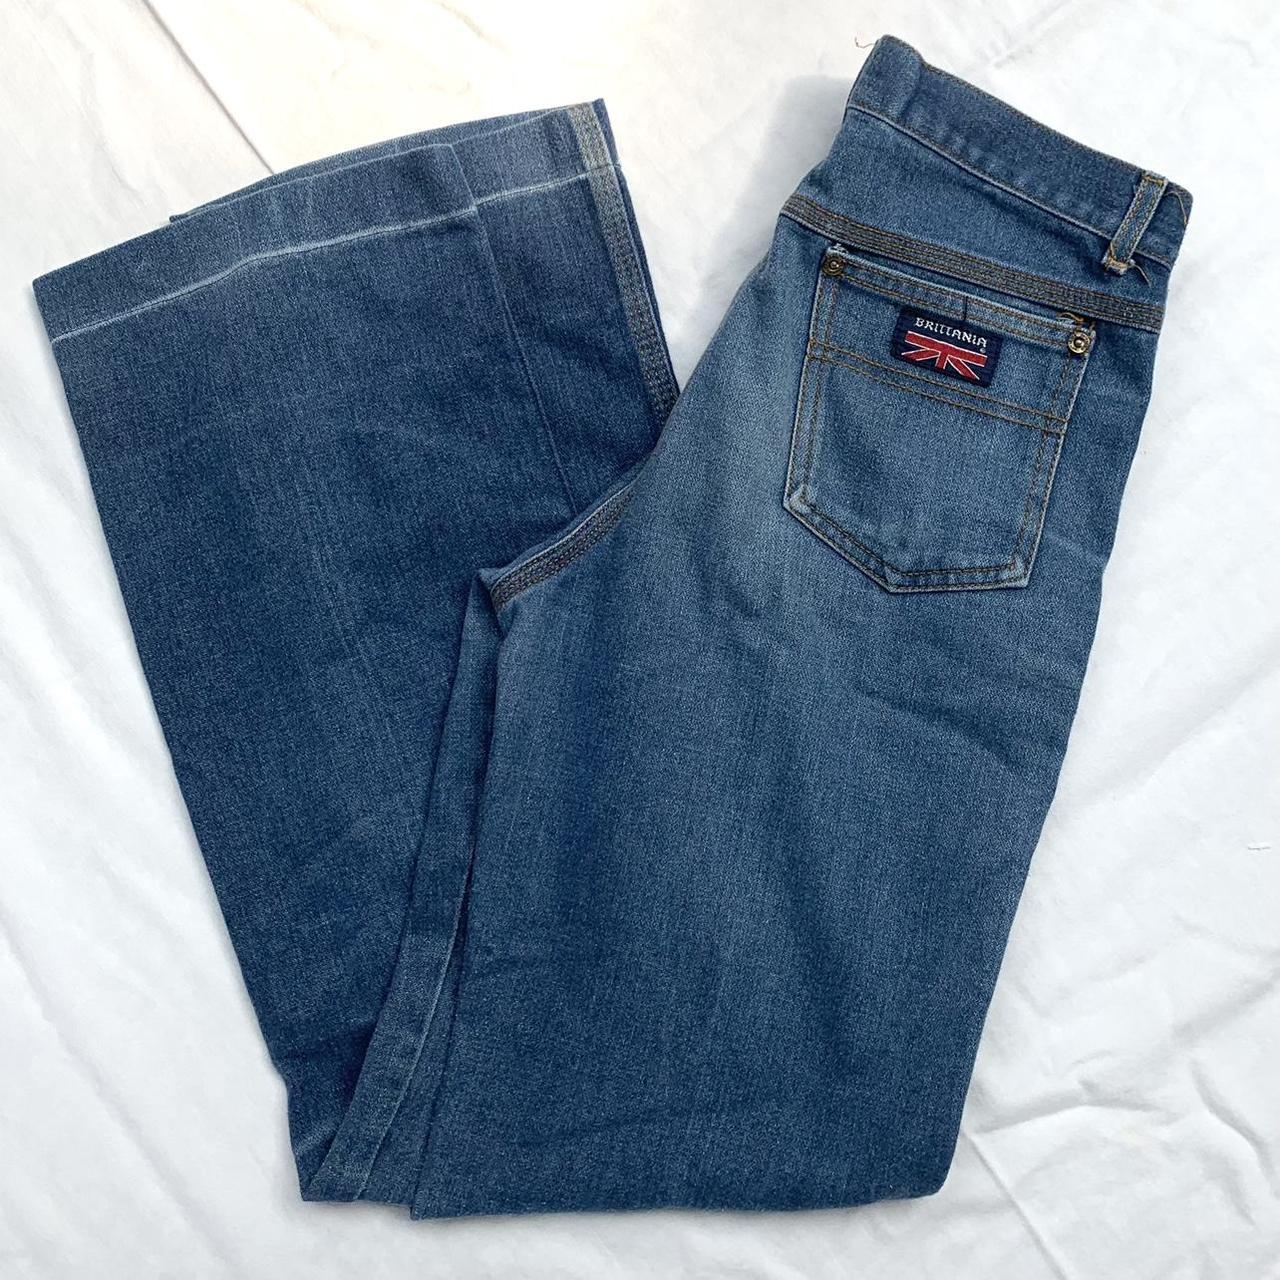 vintage 70s brittania jeans. Features a slight... - Depop